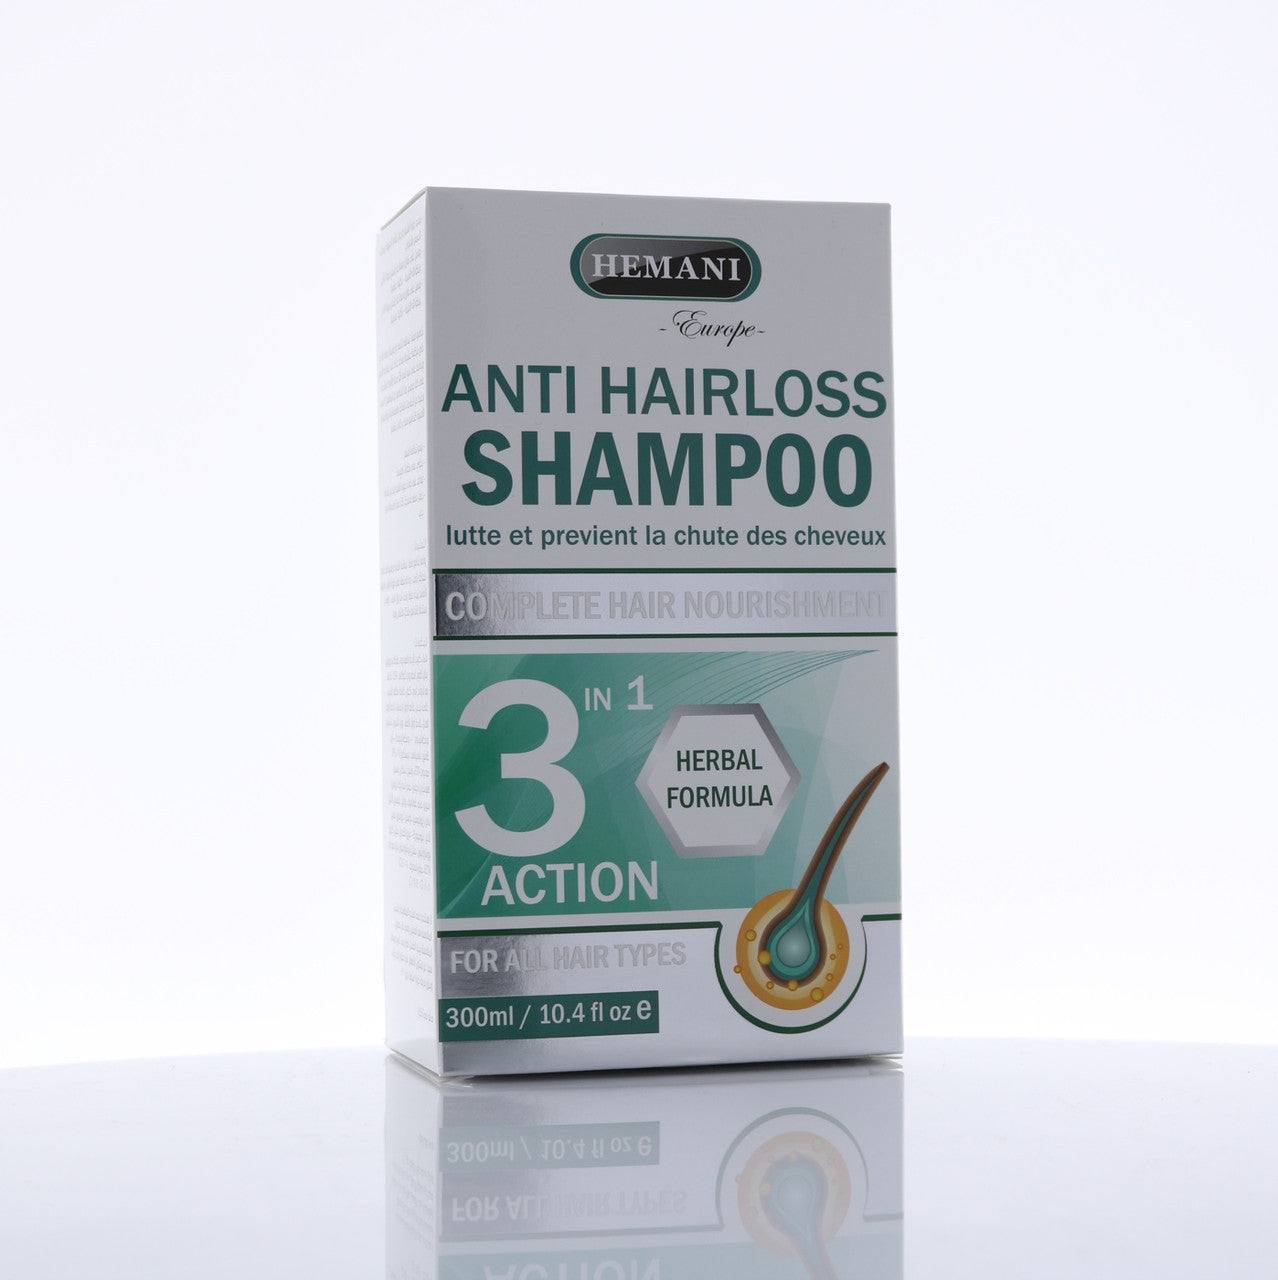 HEMANI Anti Hair Loss Shampoo 300mL